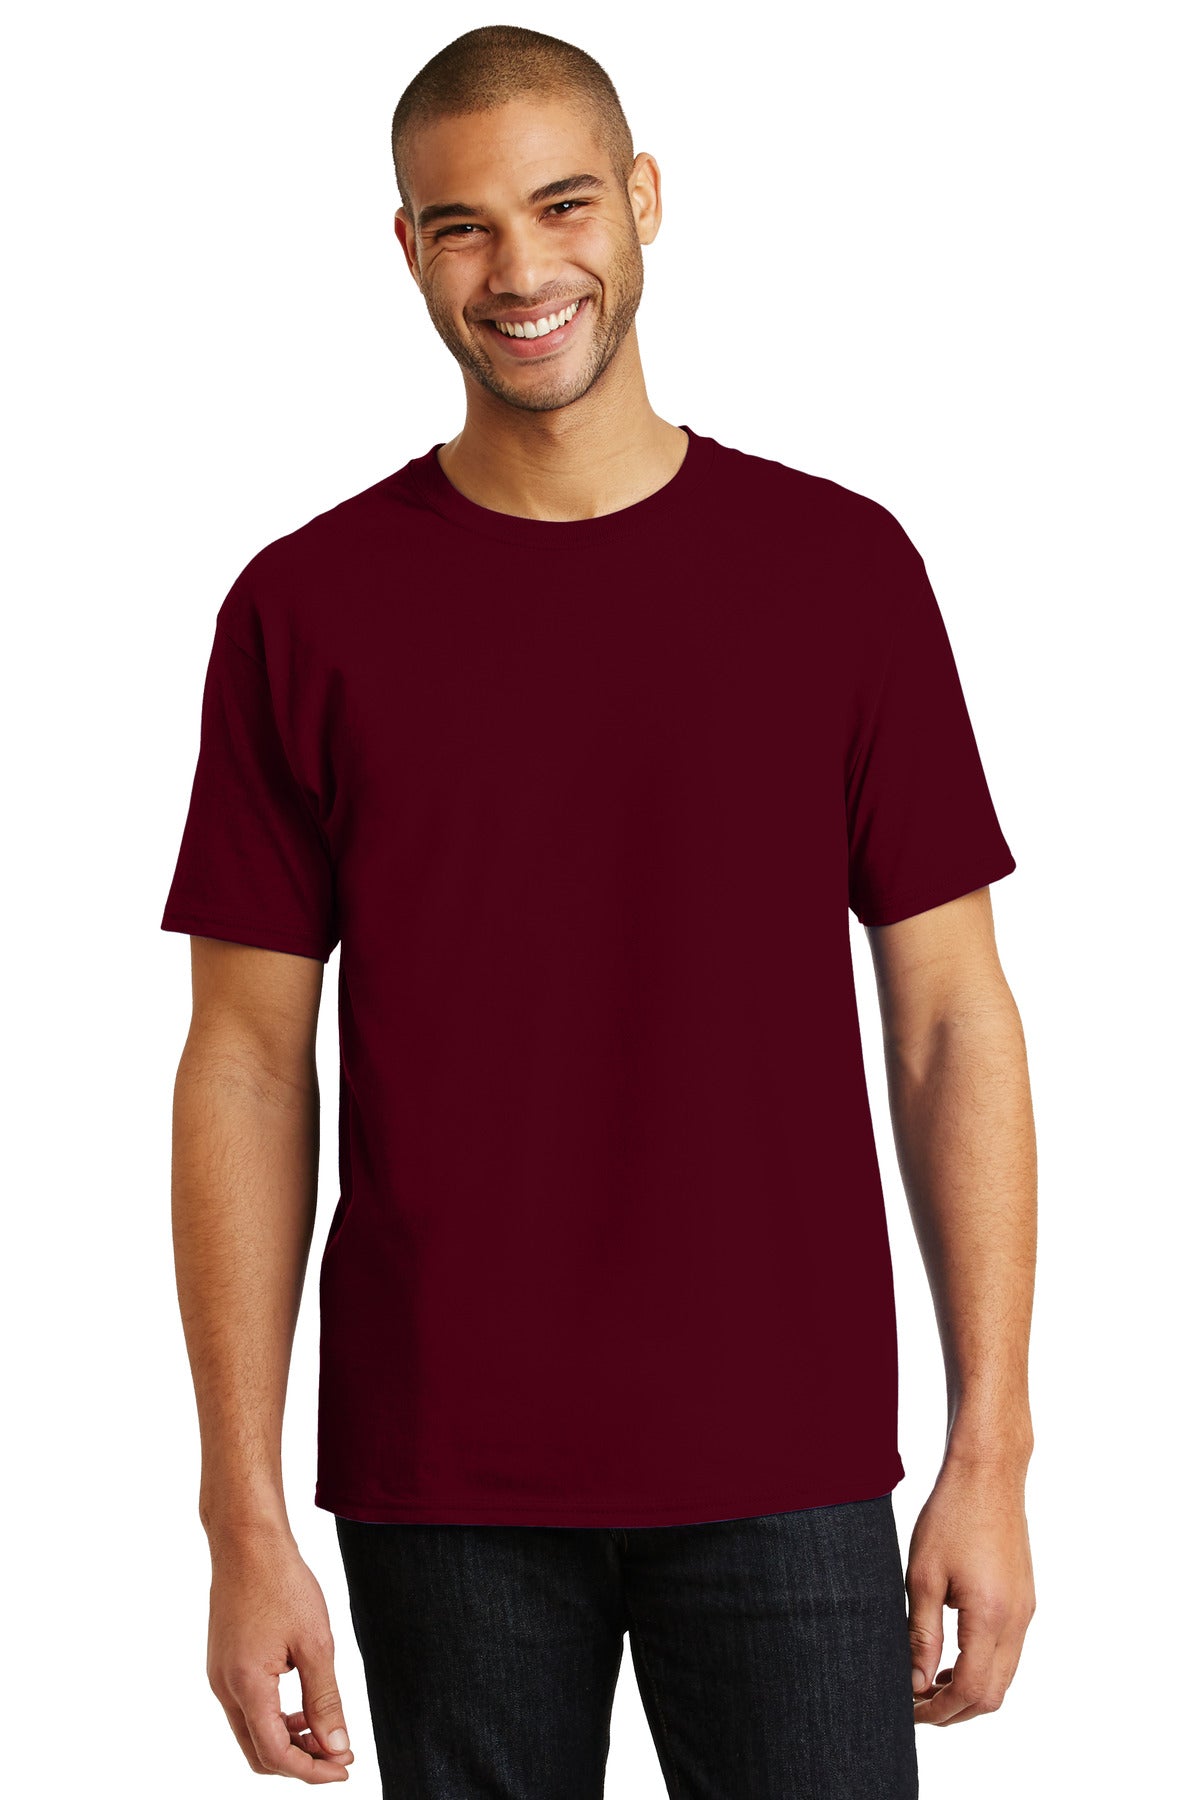 Hanes® - Authentic 100% Cotton T-Shirt. 5250 [Maroon] - DFW Impression